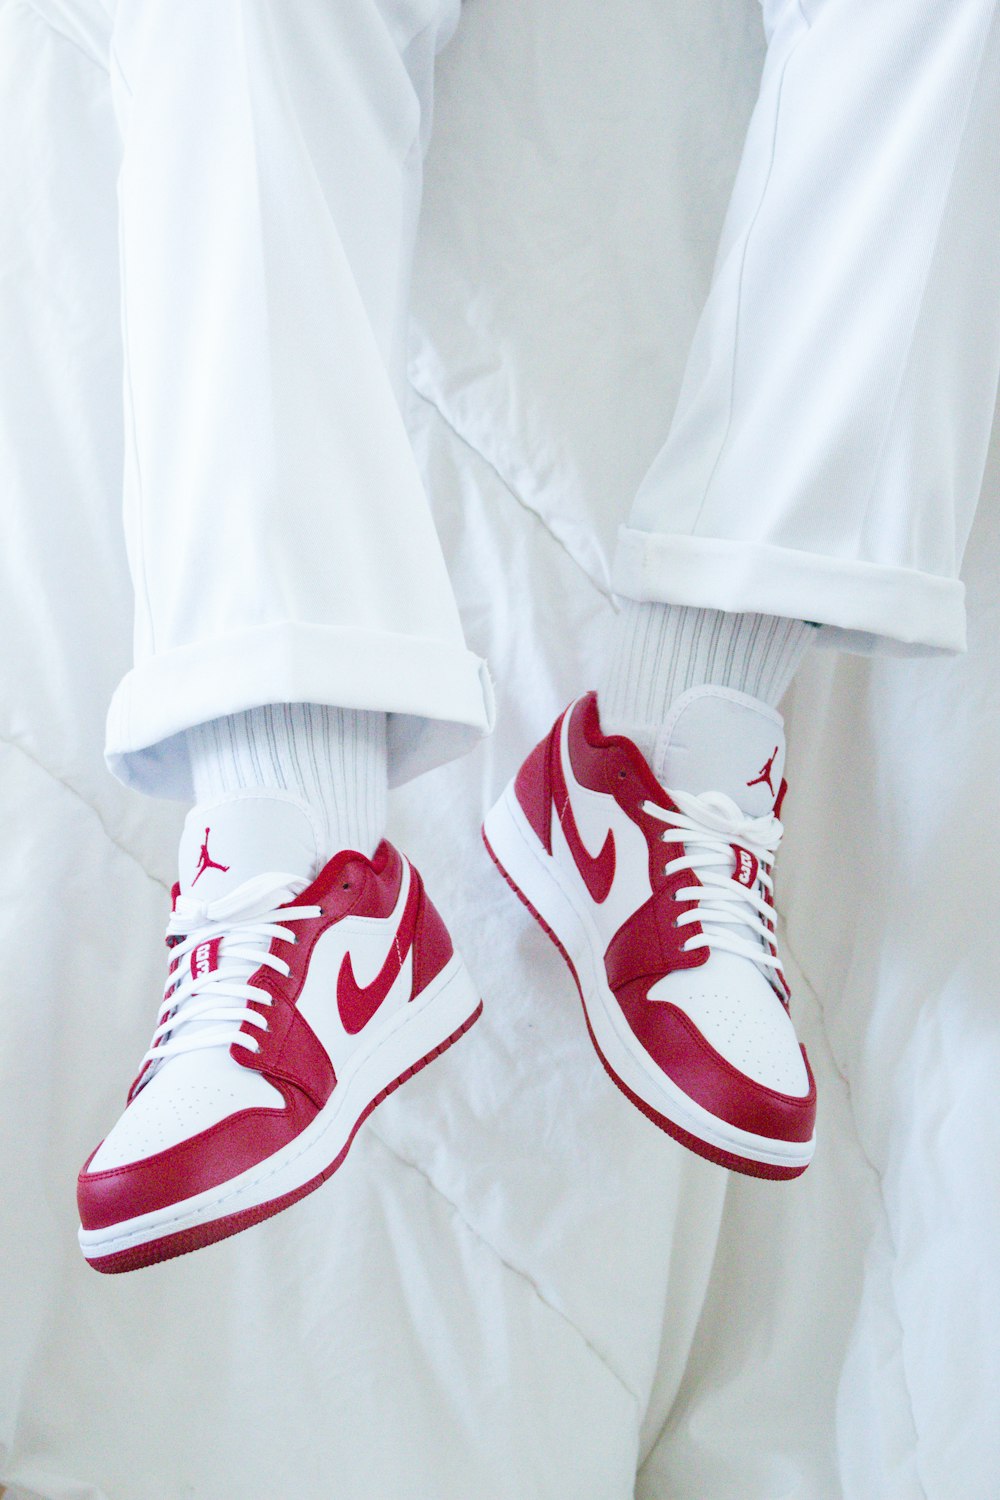 Rote und weiße Nike Sneakers